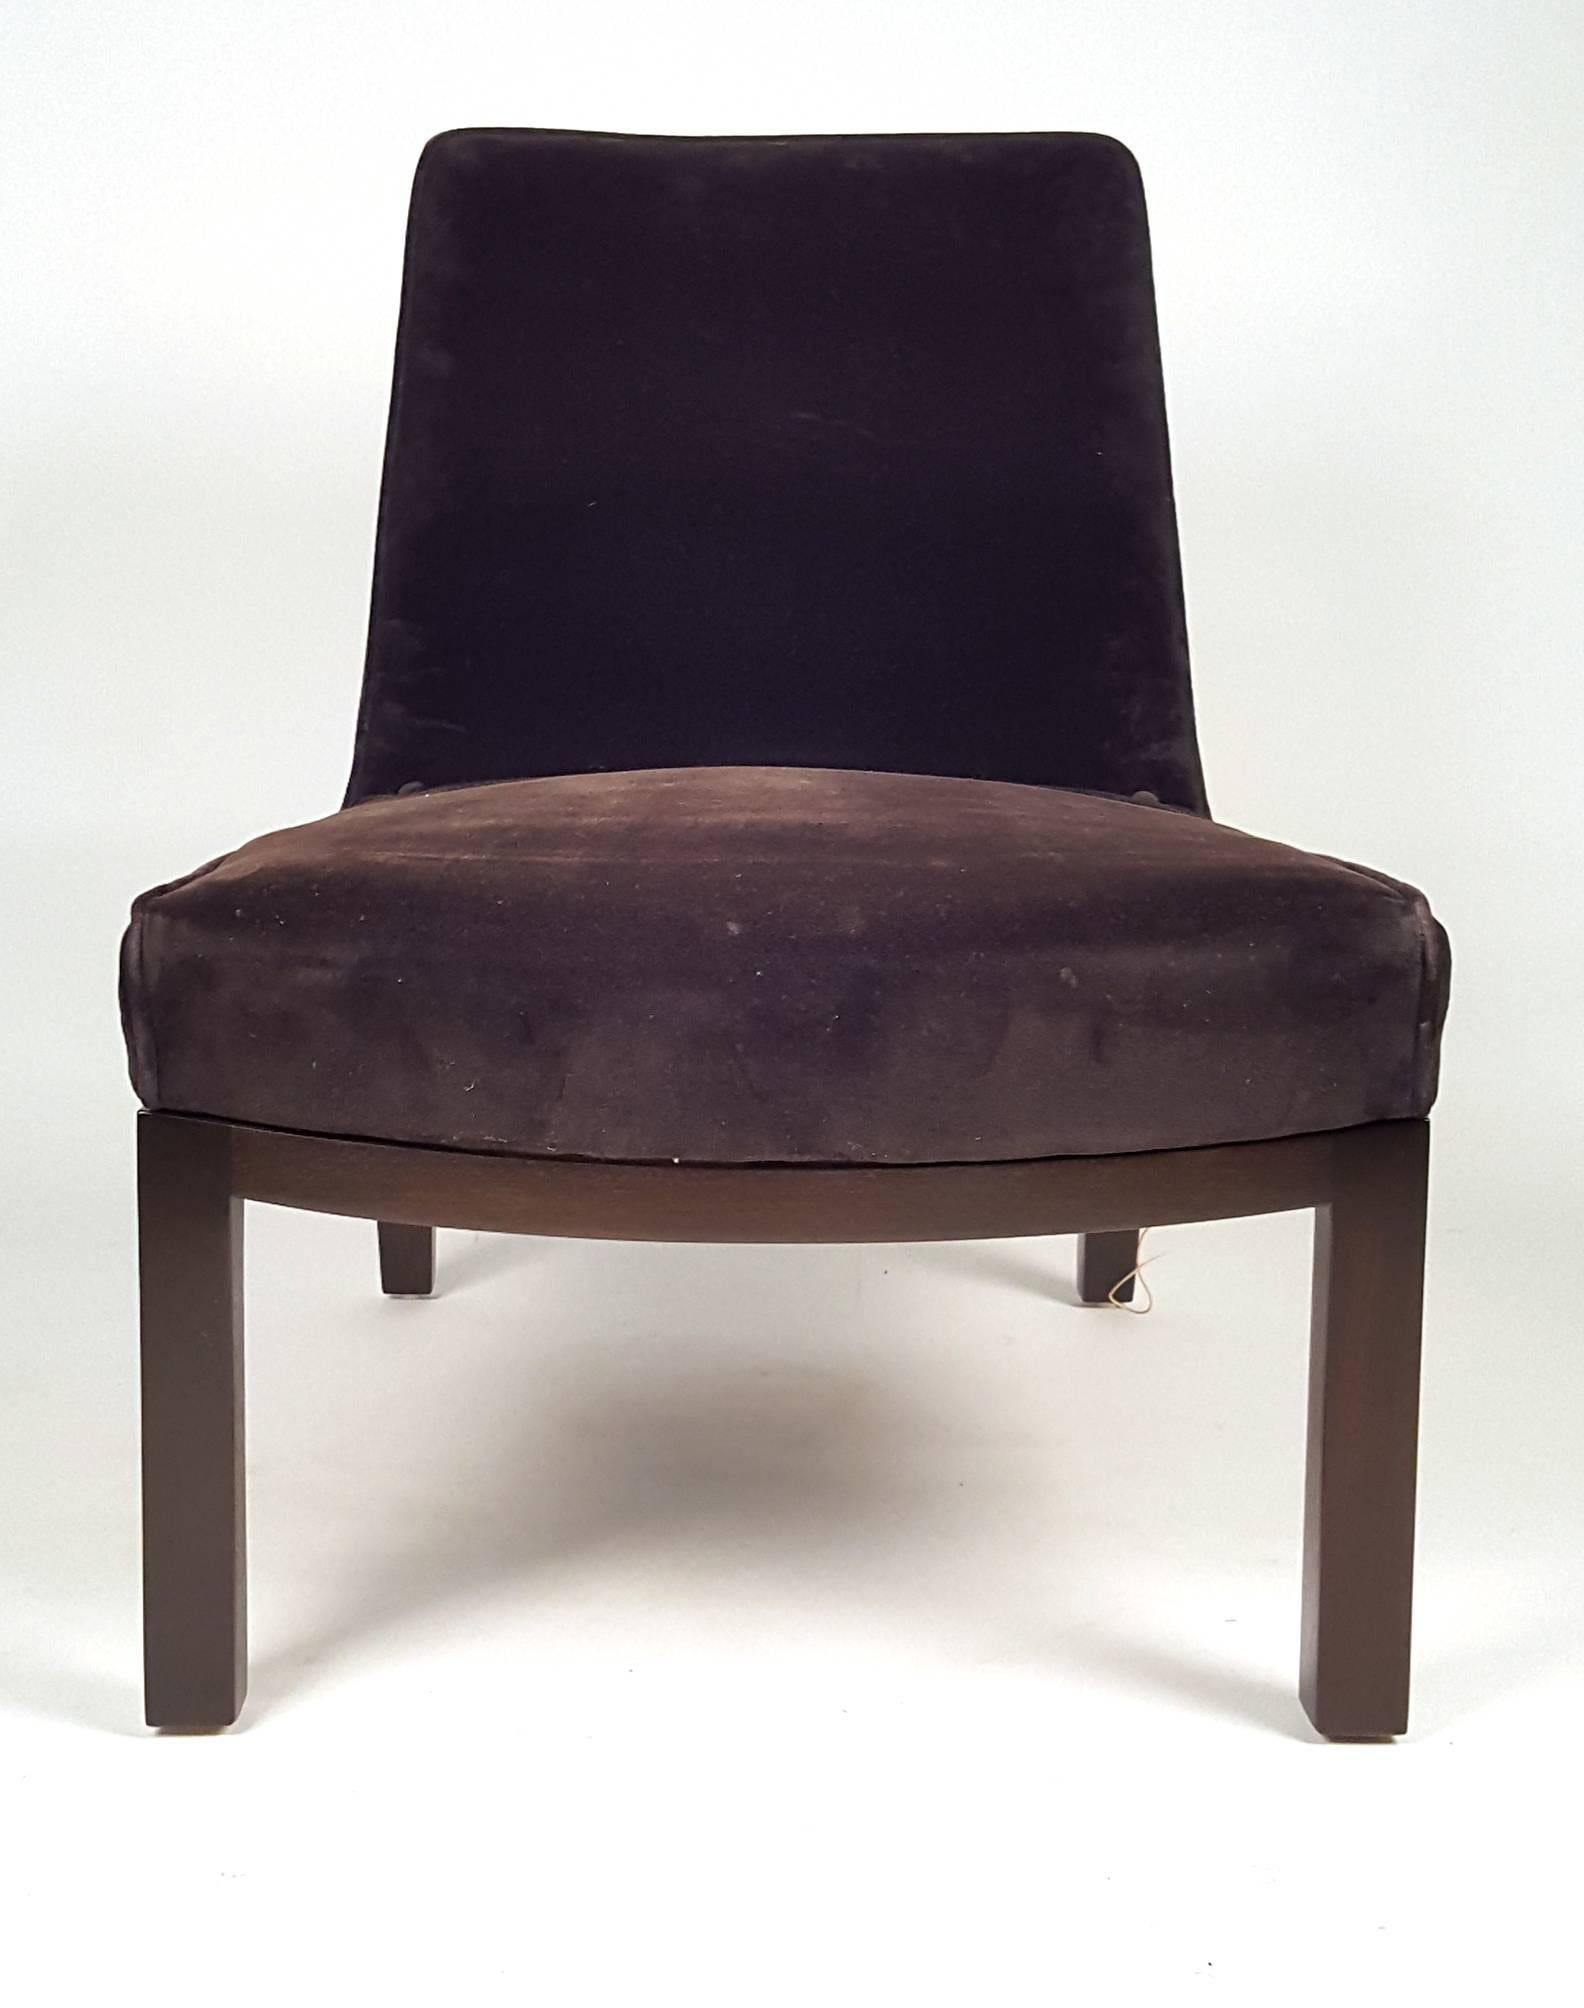 American Edward Wormley Slipper Chairs for Dunbar For Sale